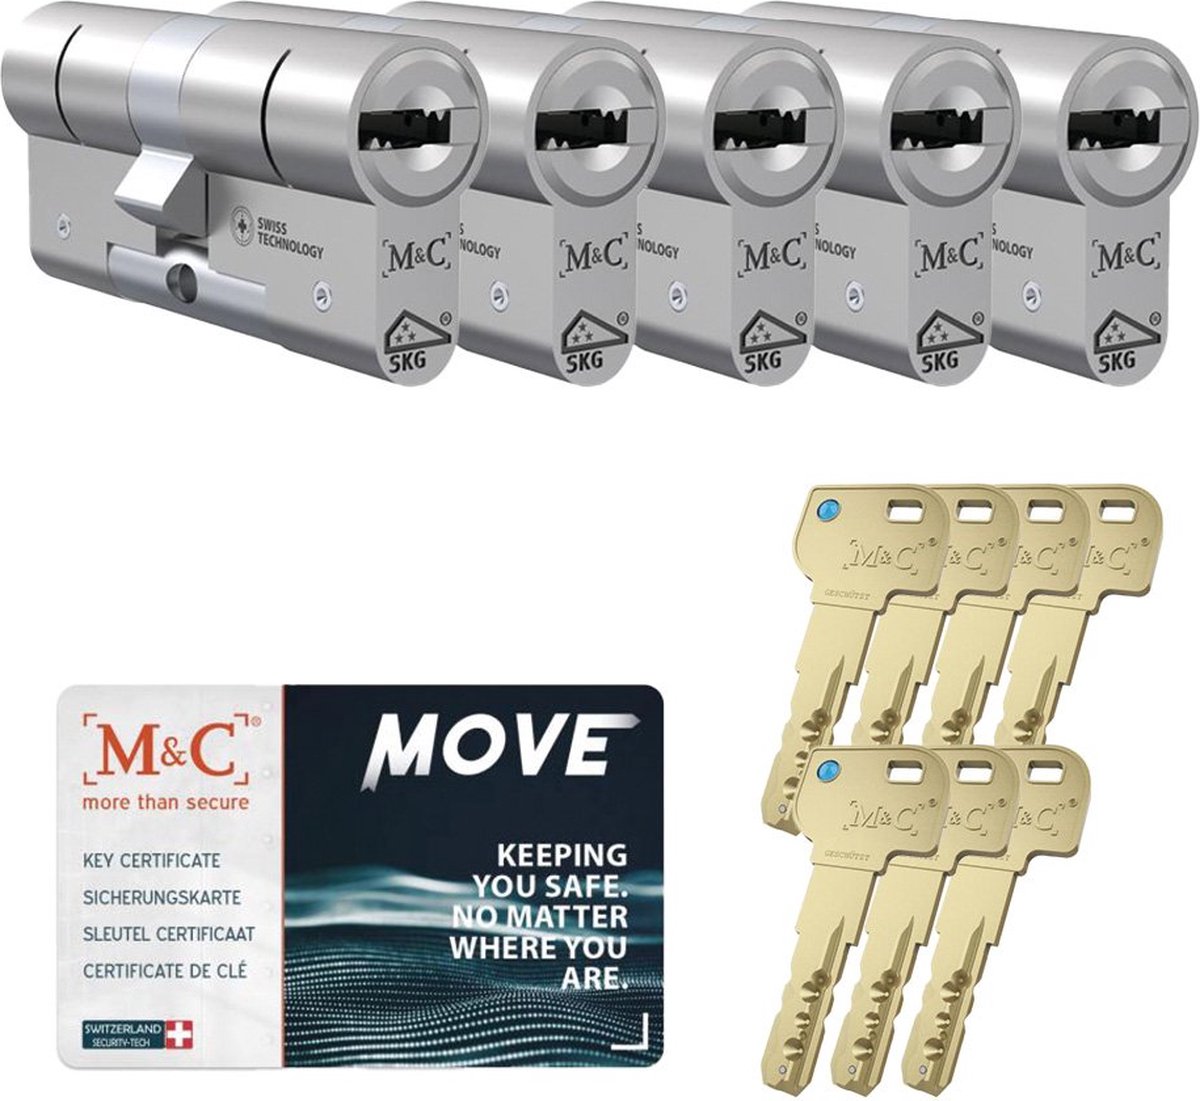 M&C Move SKG*** cilinderslot gelijksluitende set van 5